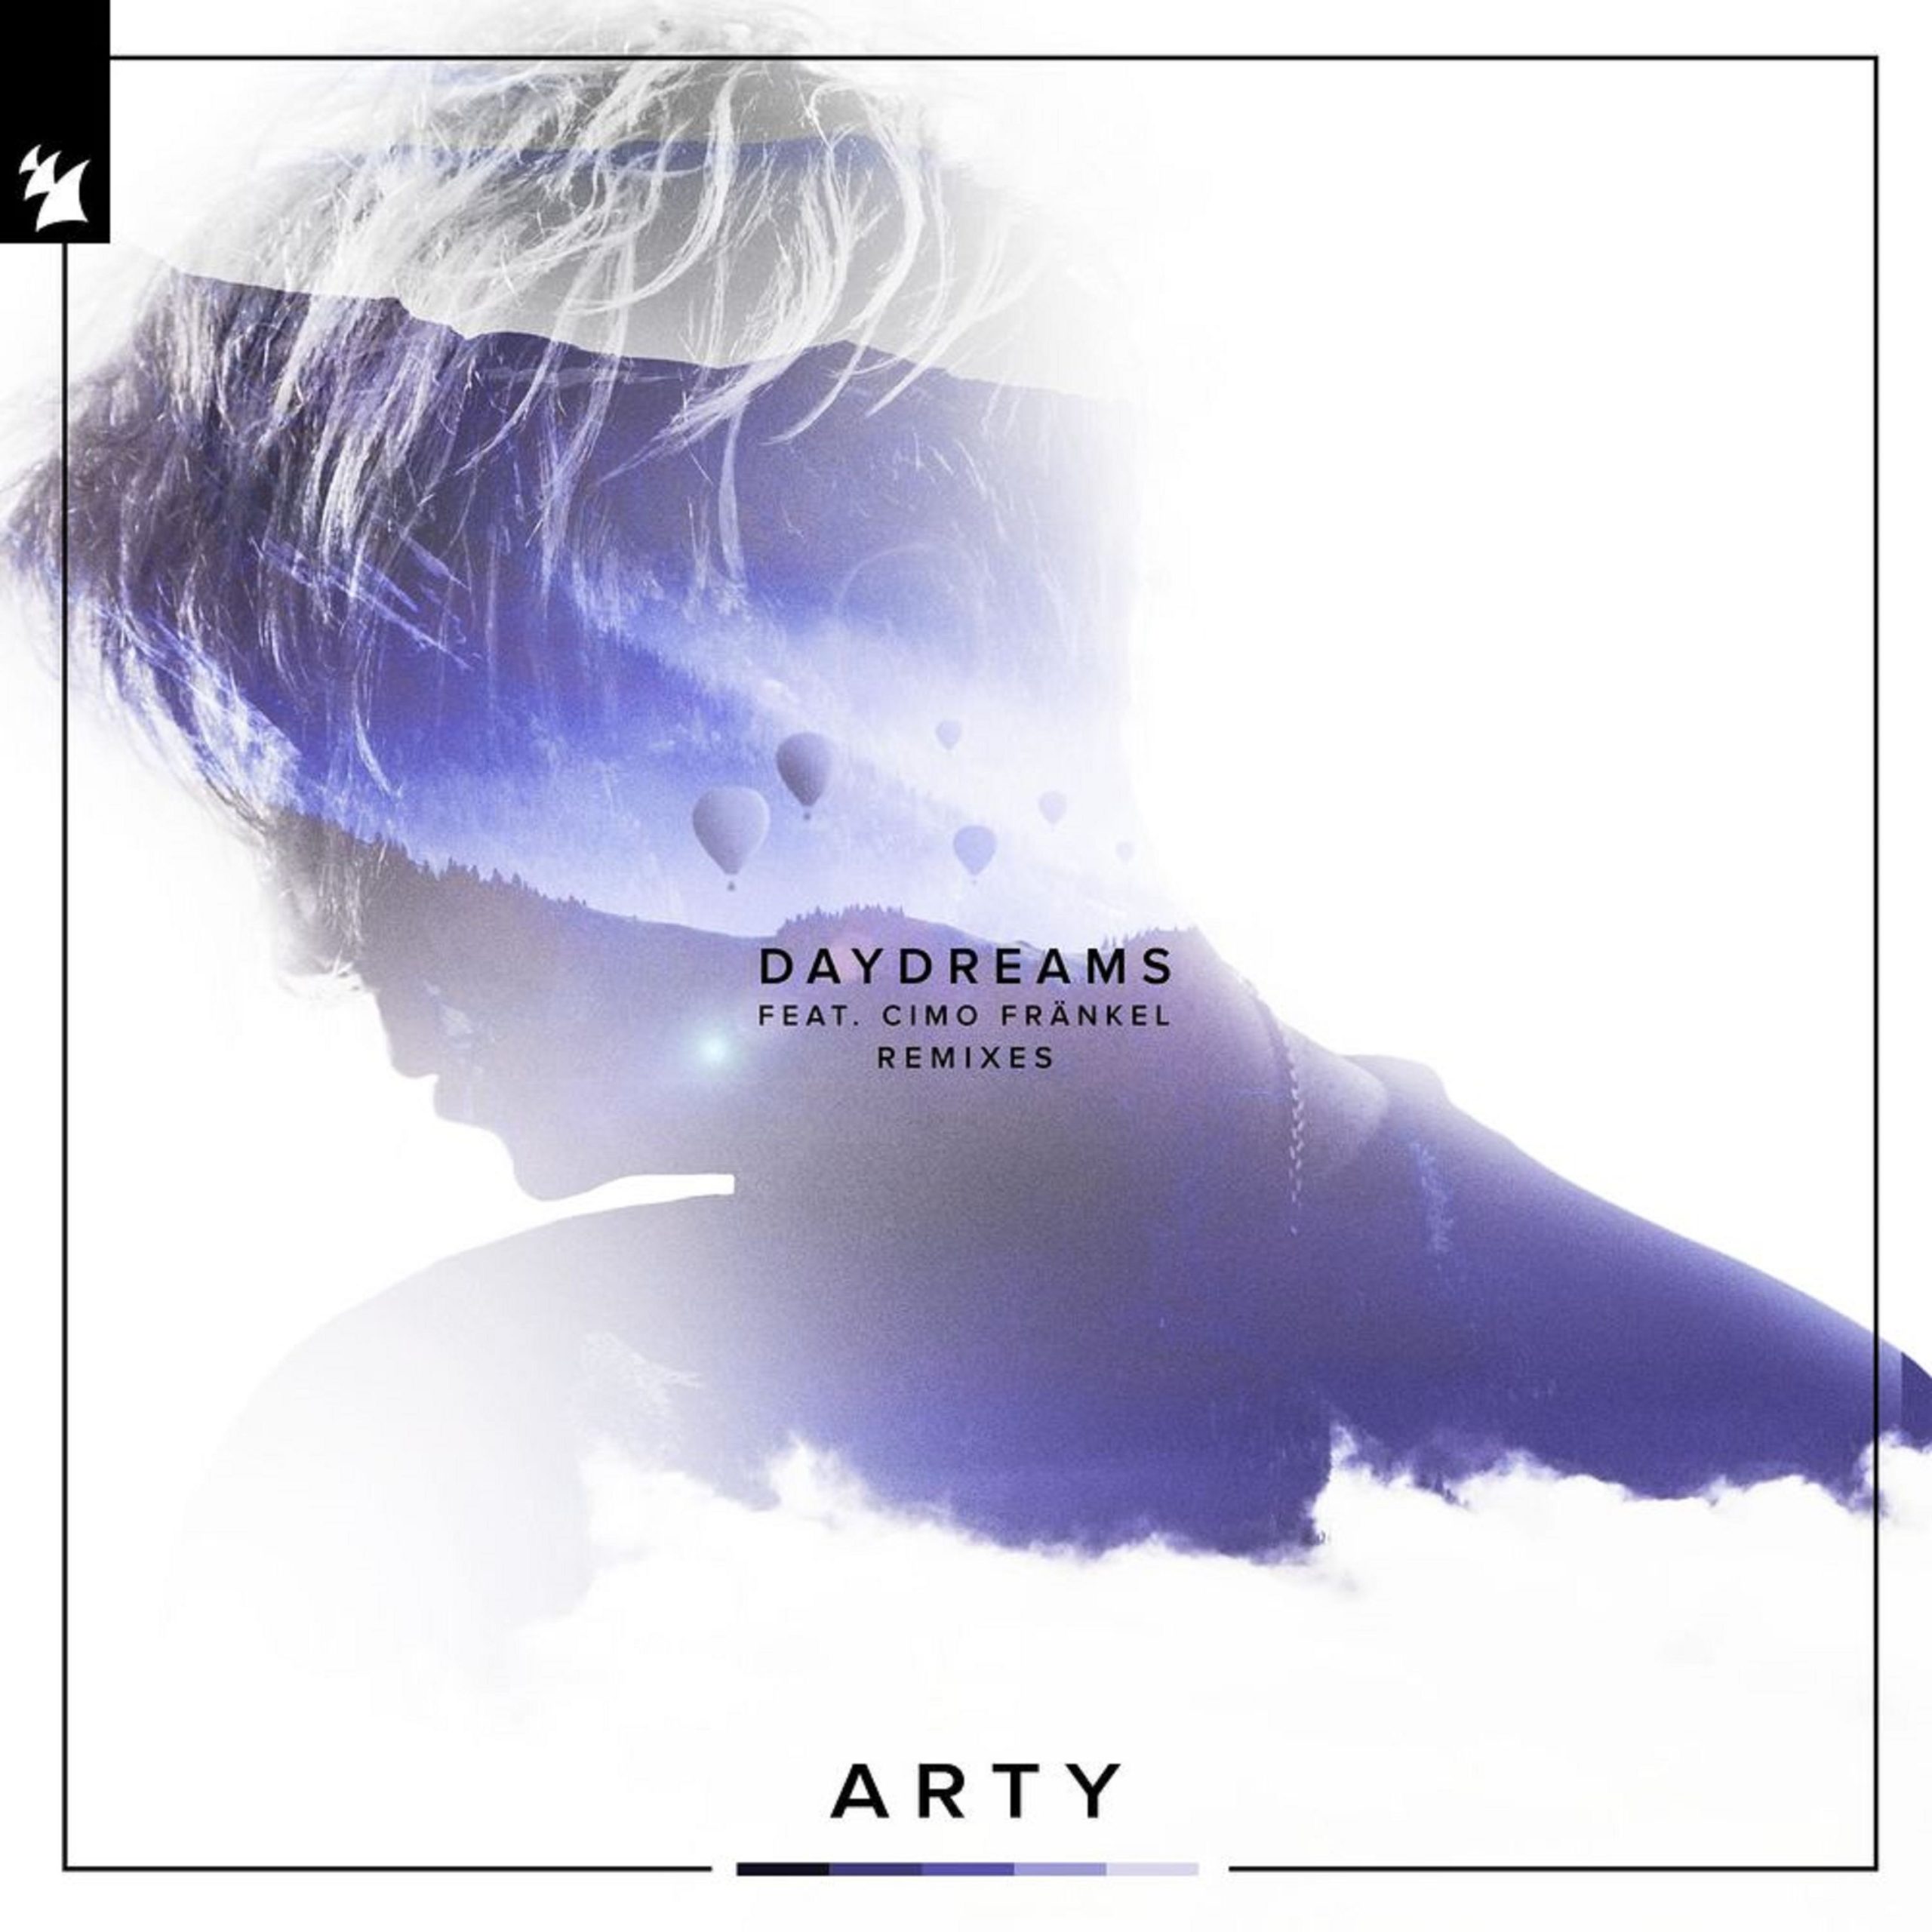 ARTY feat. Cimo Fränkel presents Daydreams (Remixes) on Armada Music